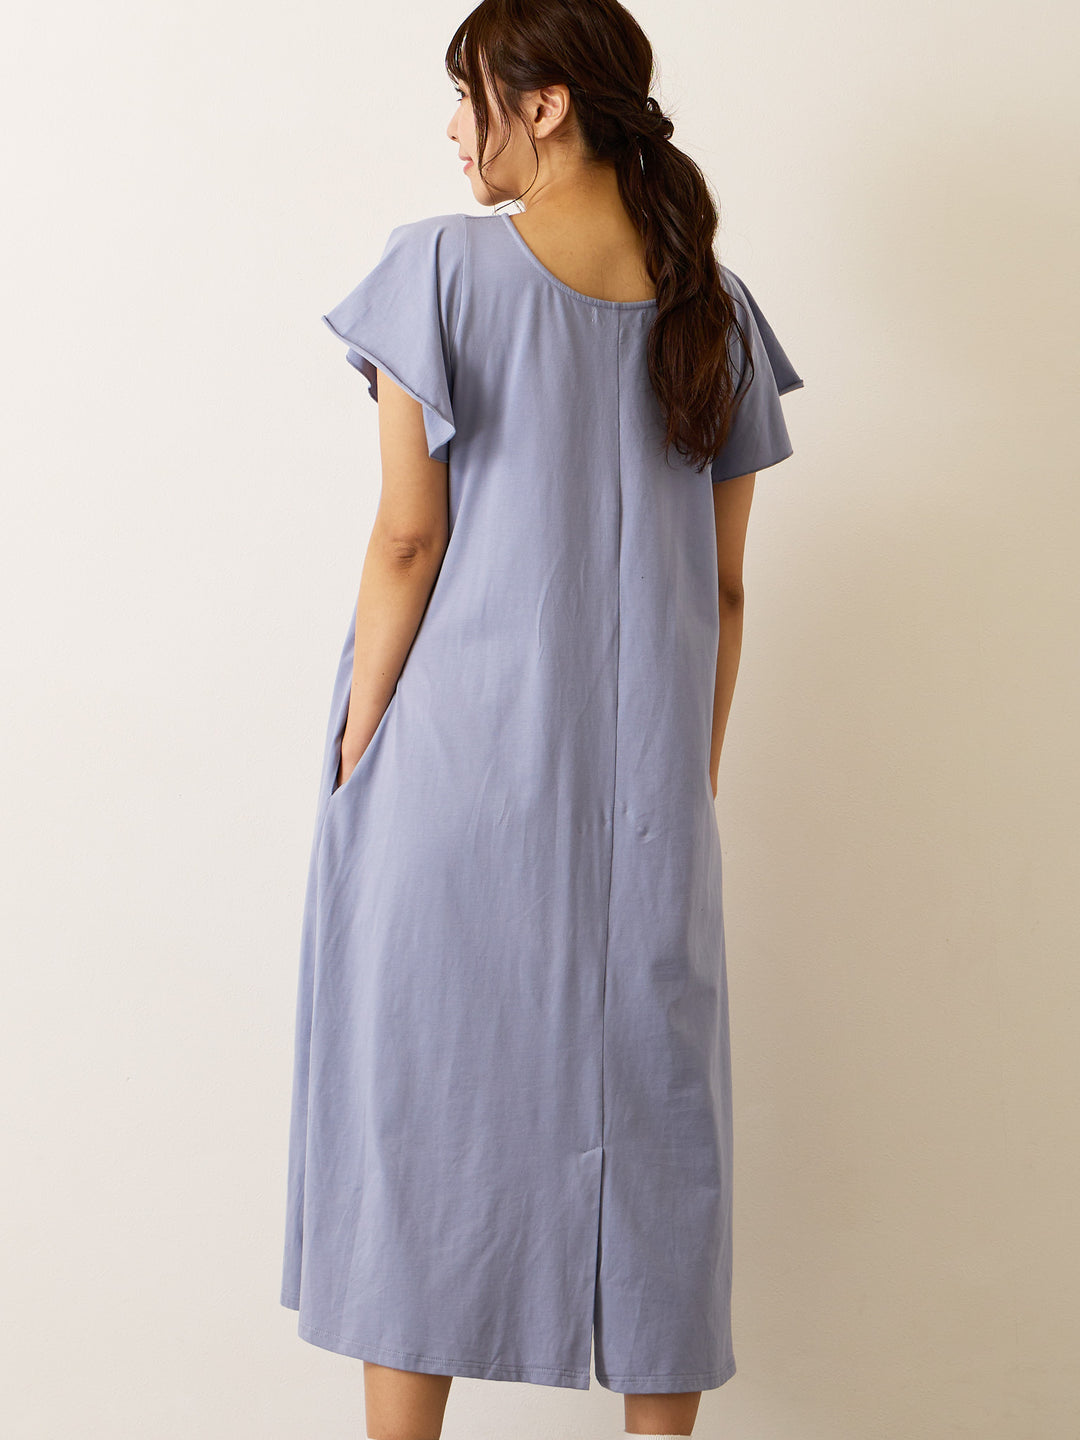 [Maternity/nursing clothes] Room dress Blue